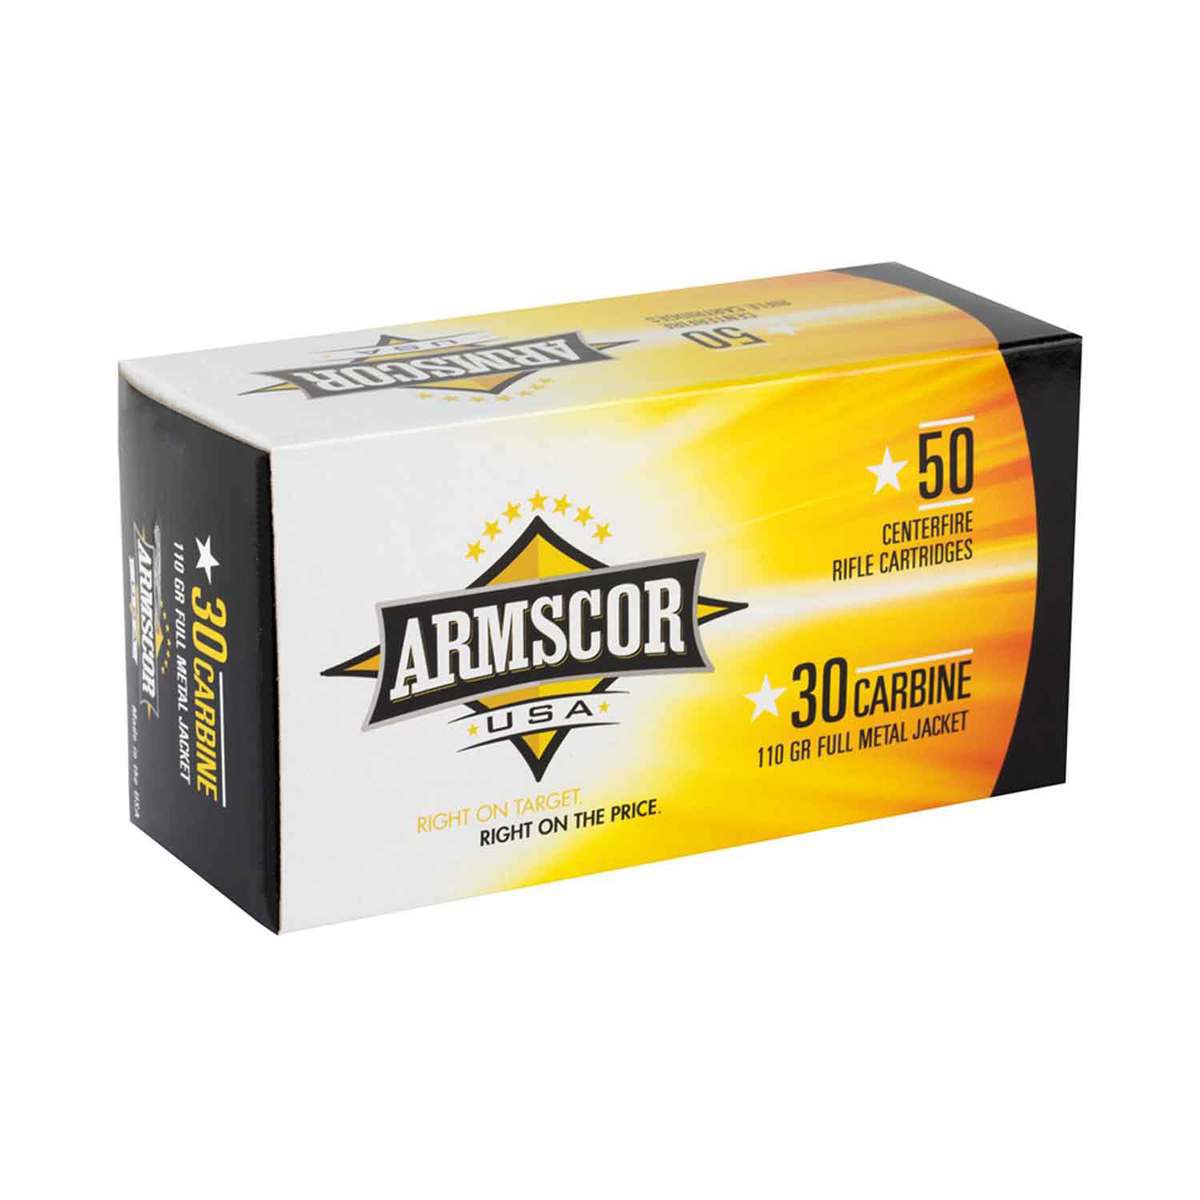 Armscor 30 Carbine 110gr Fmj Rifle Ammo 50 Rounds Sportsmans Warehouse 4799